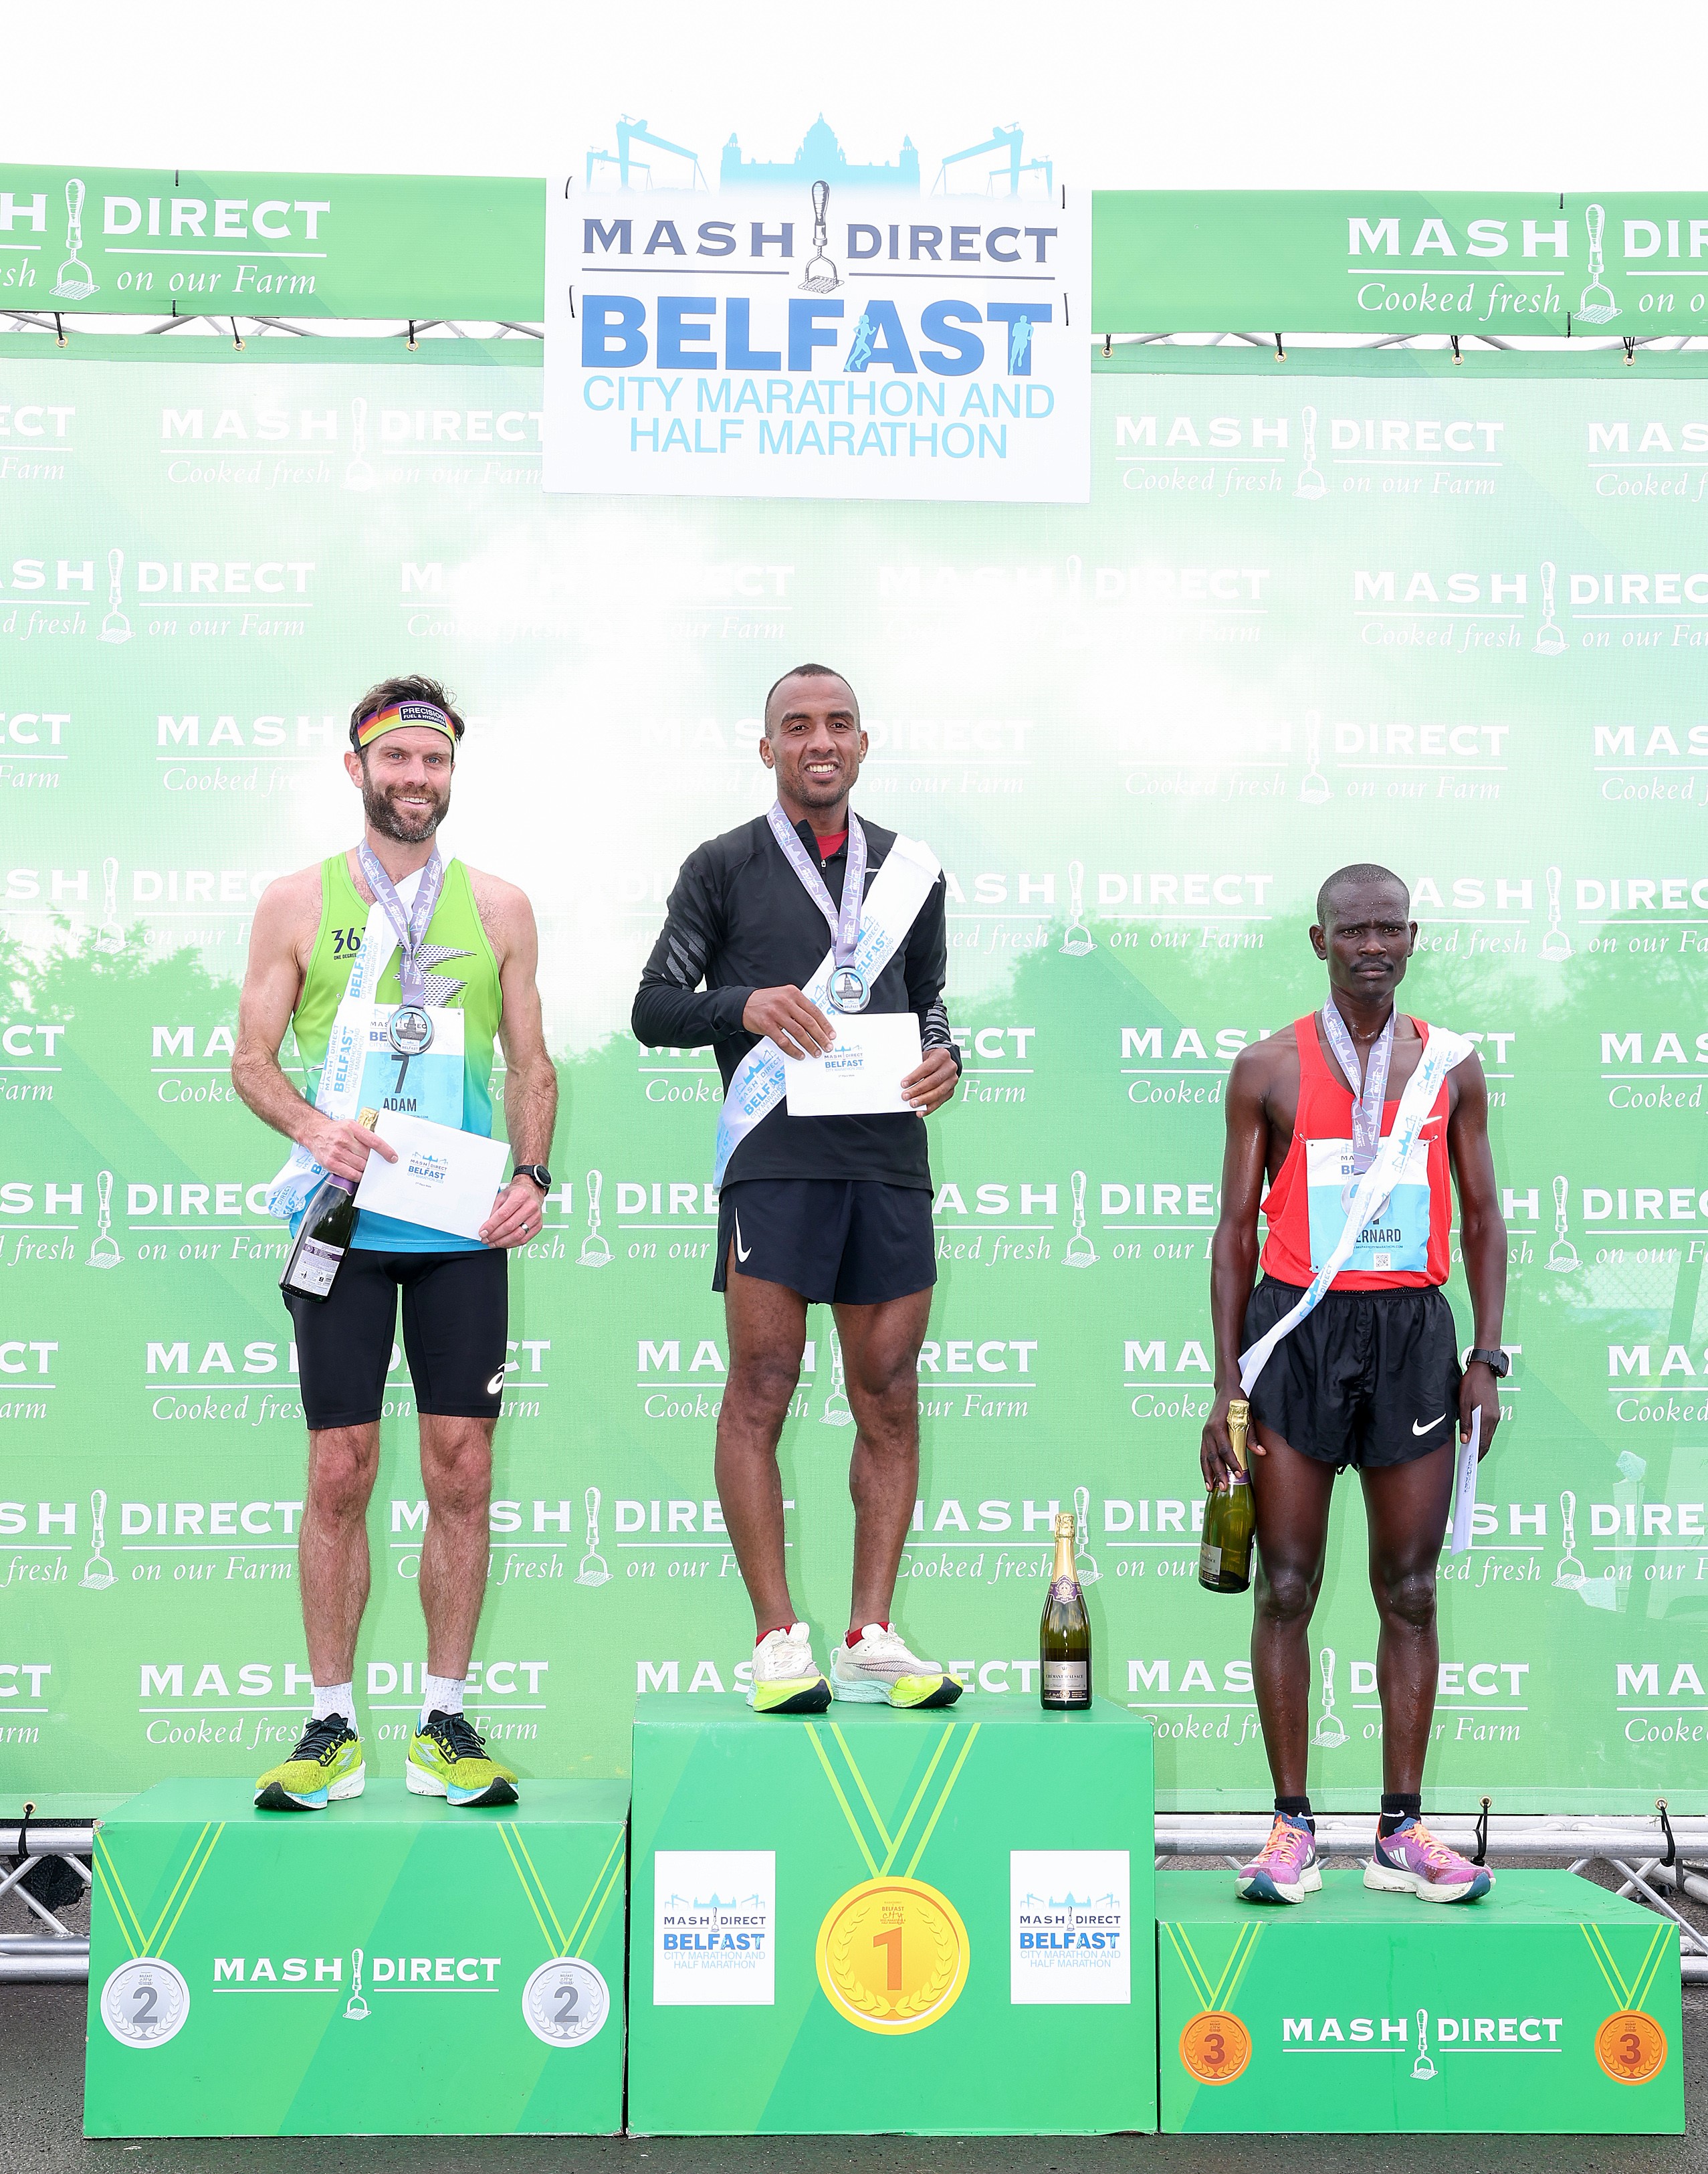 Honours Go To Woldemeskel and Oumaarir in Mash Direct Belfast City Marathon